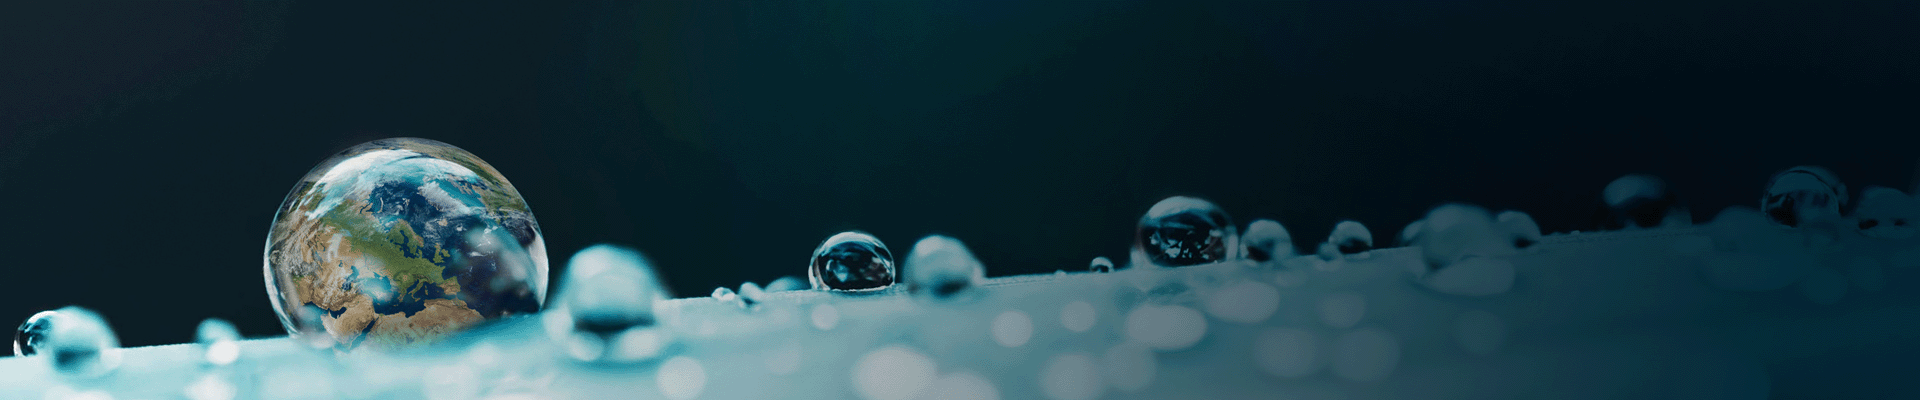 Water drop shaped like the earth